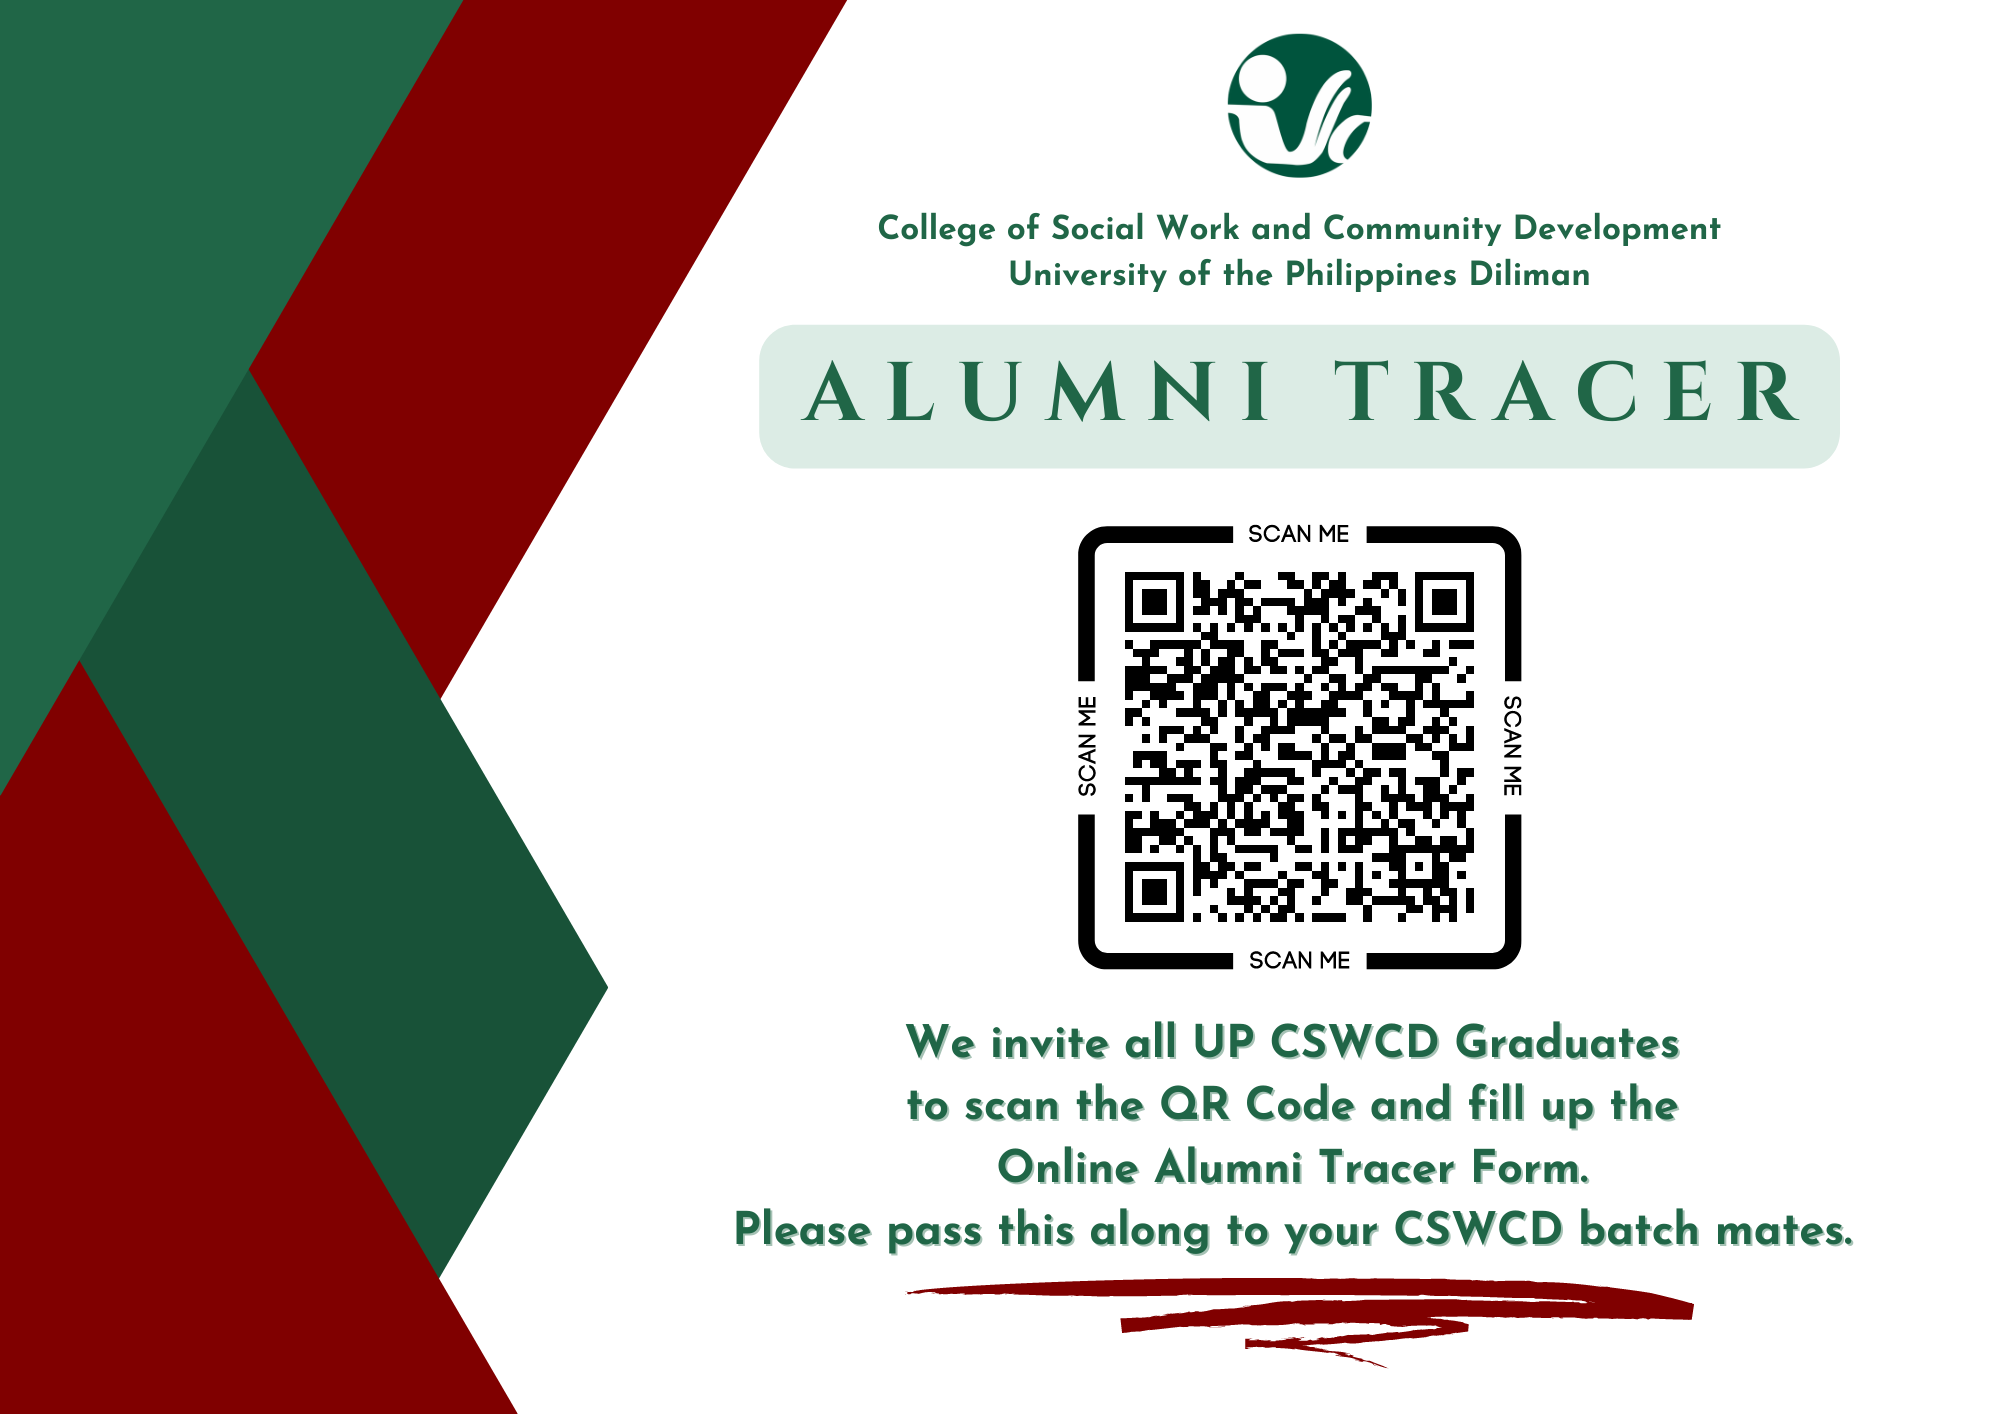 CSWCD Alumni Tracer